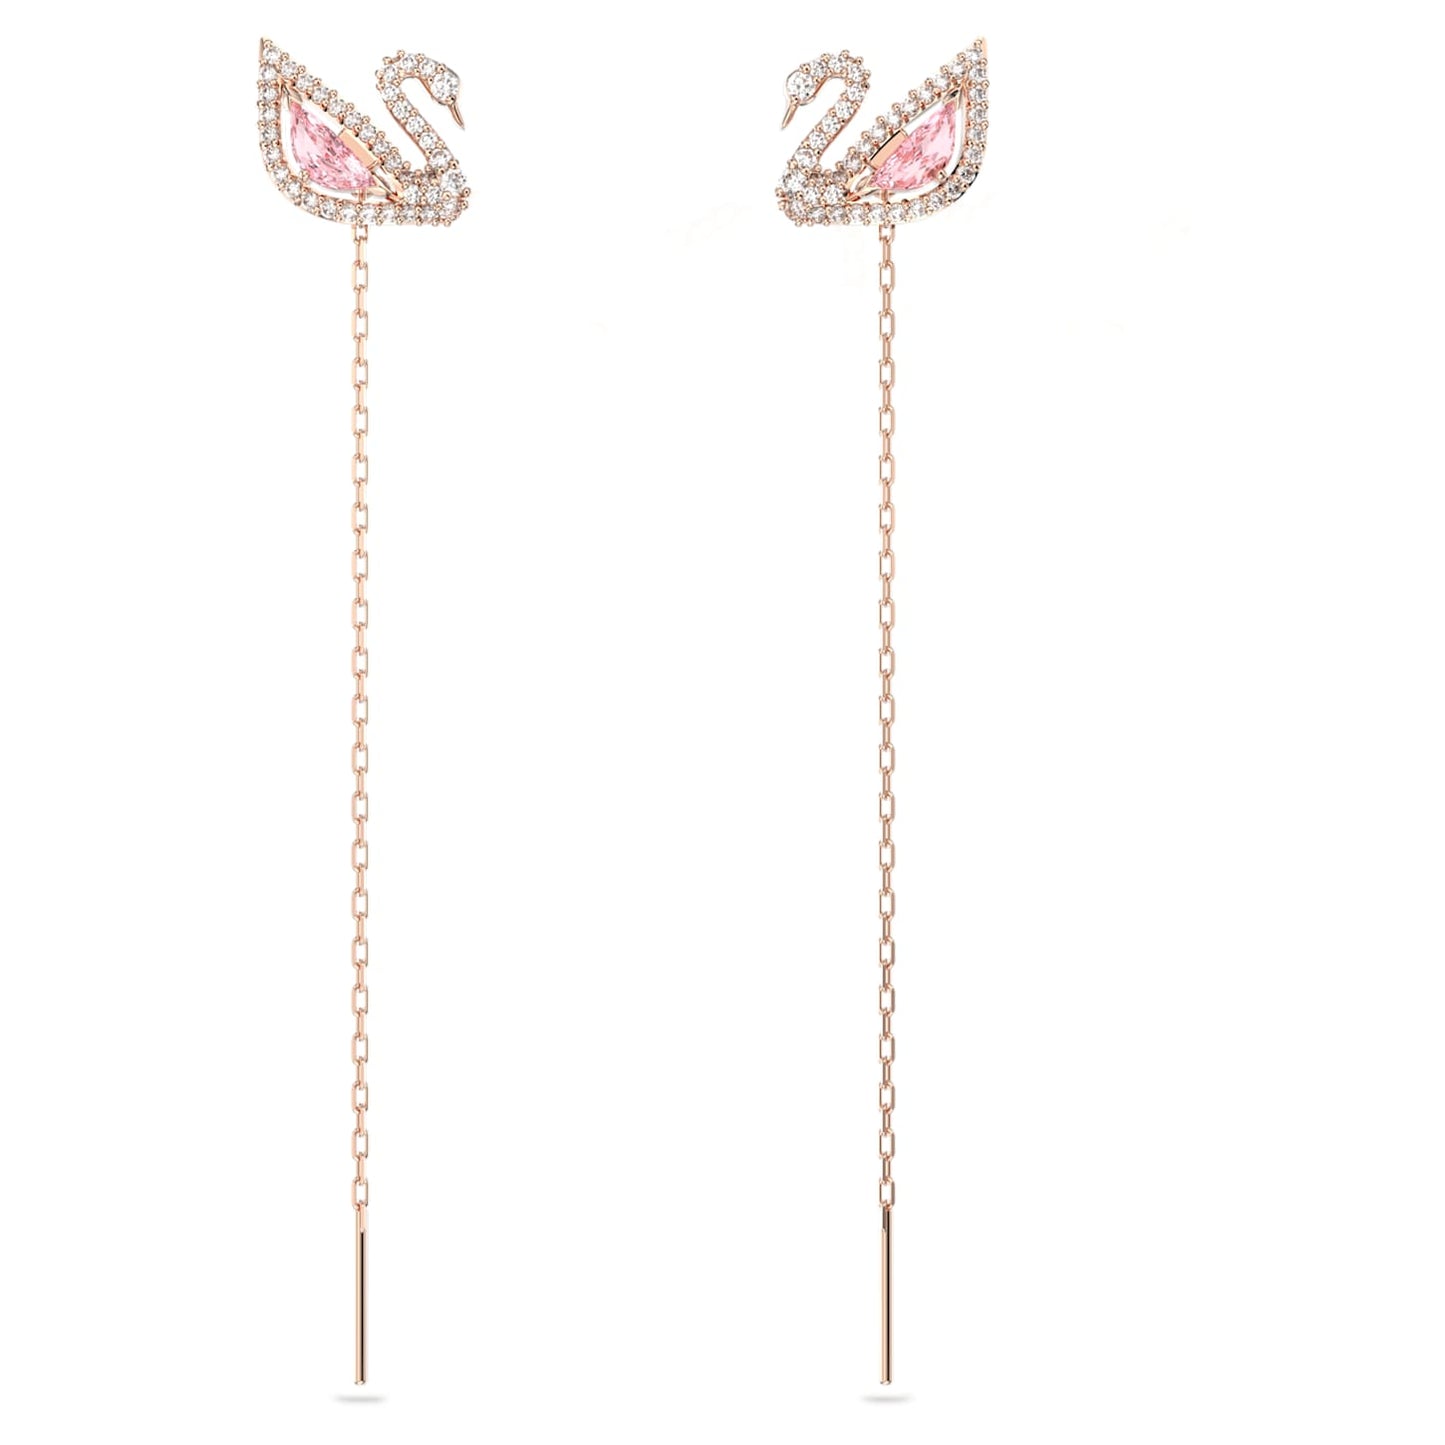 Bông tai thiên nga Swarovski - Dazzling Swan Pierced Earrings Pink Rose Gold - 3